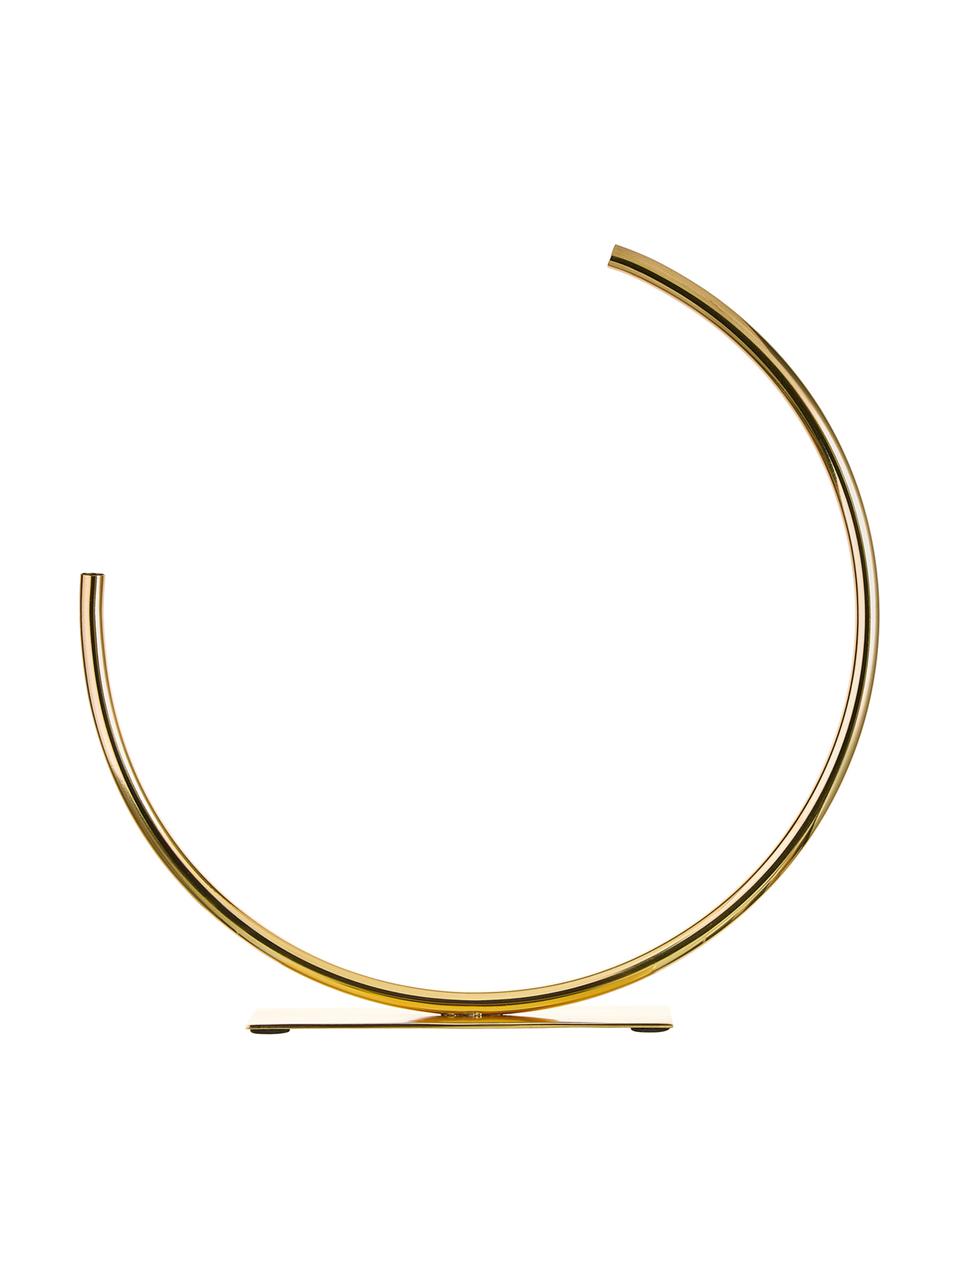 Deko-Objekt Circle, Metall, Goldfarben, 39 x 40 cm